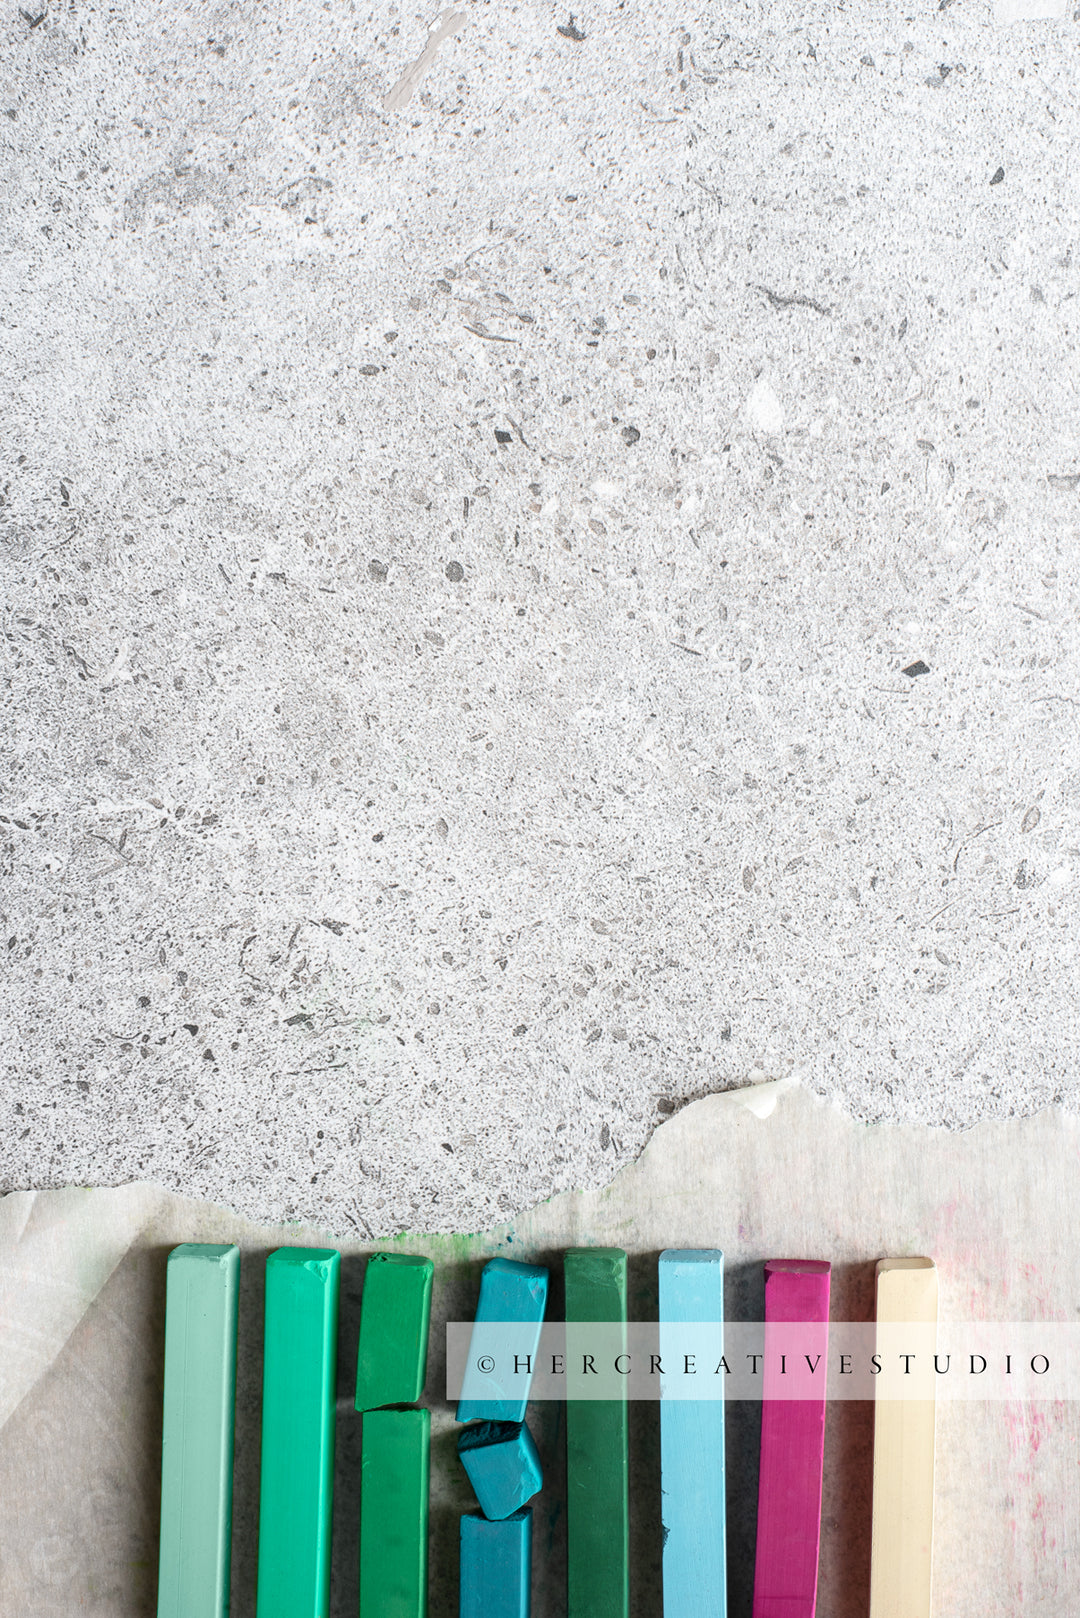 Chalk Pastels on Granite Background. Styled Stock Image